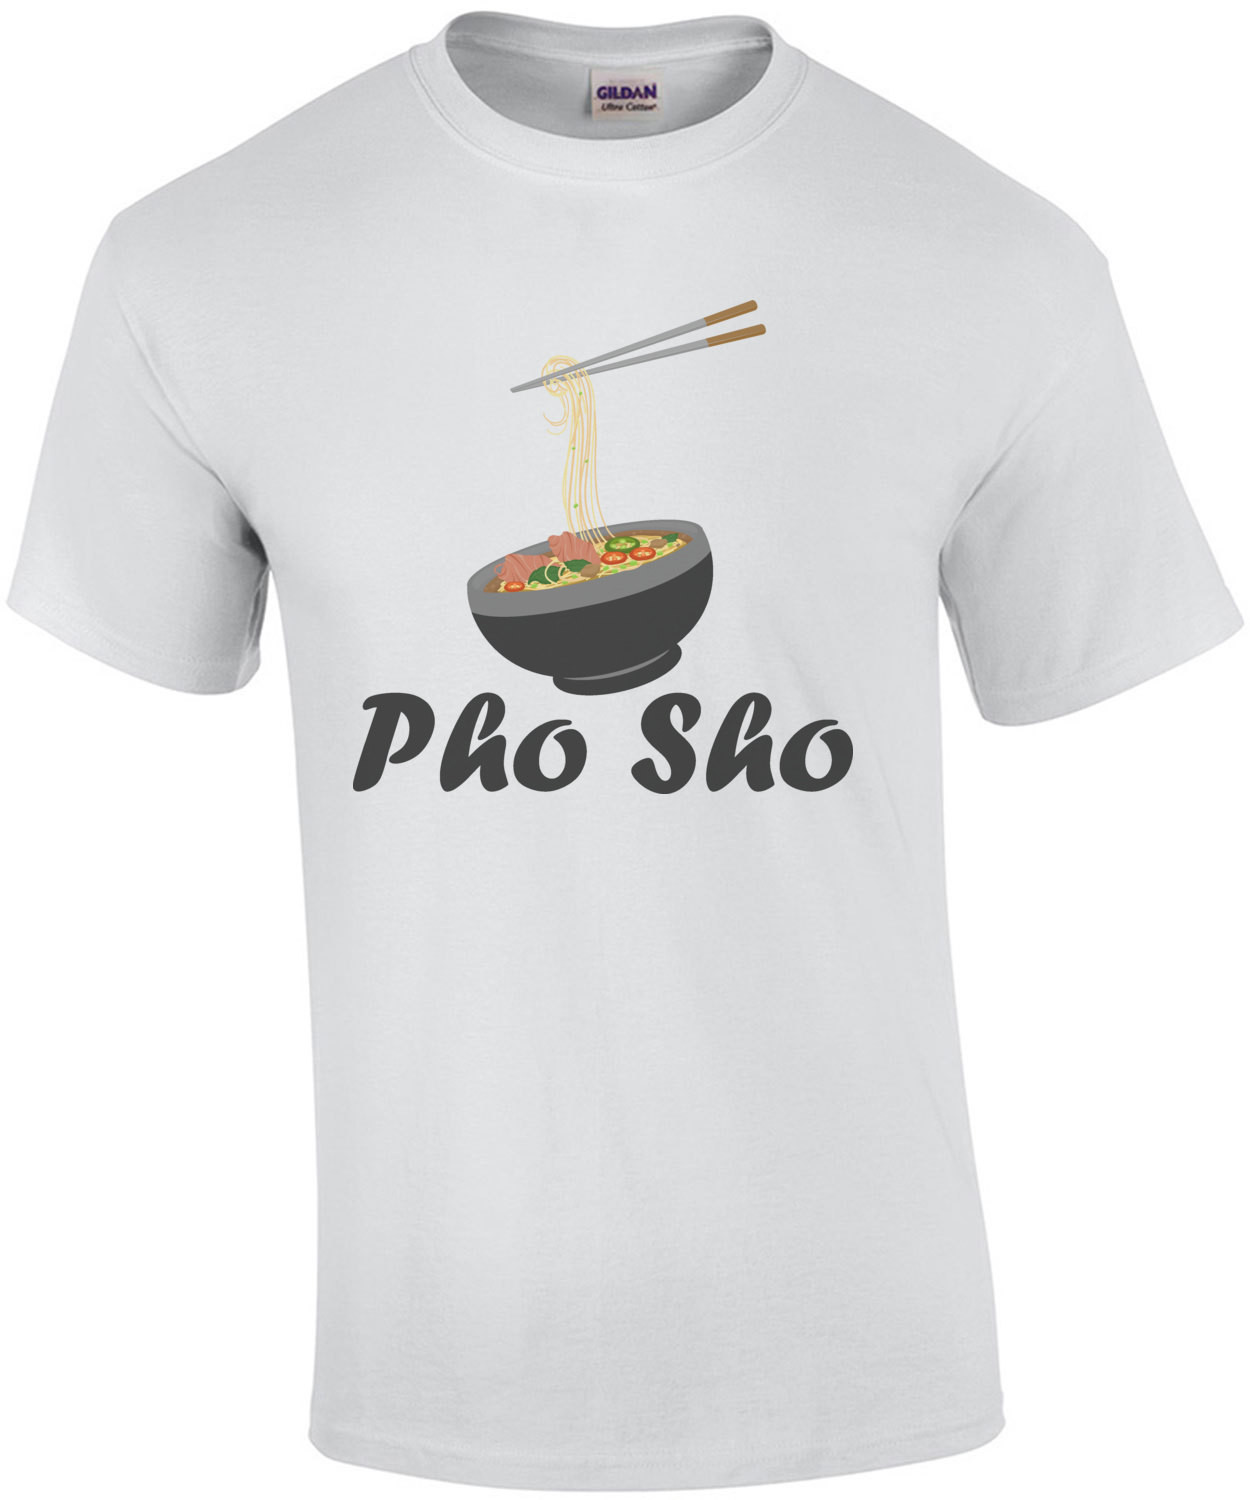 Pho Sho - Pho T-Shirt - Pun T-Shirt